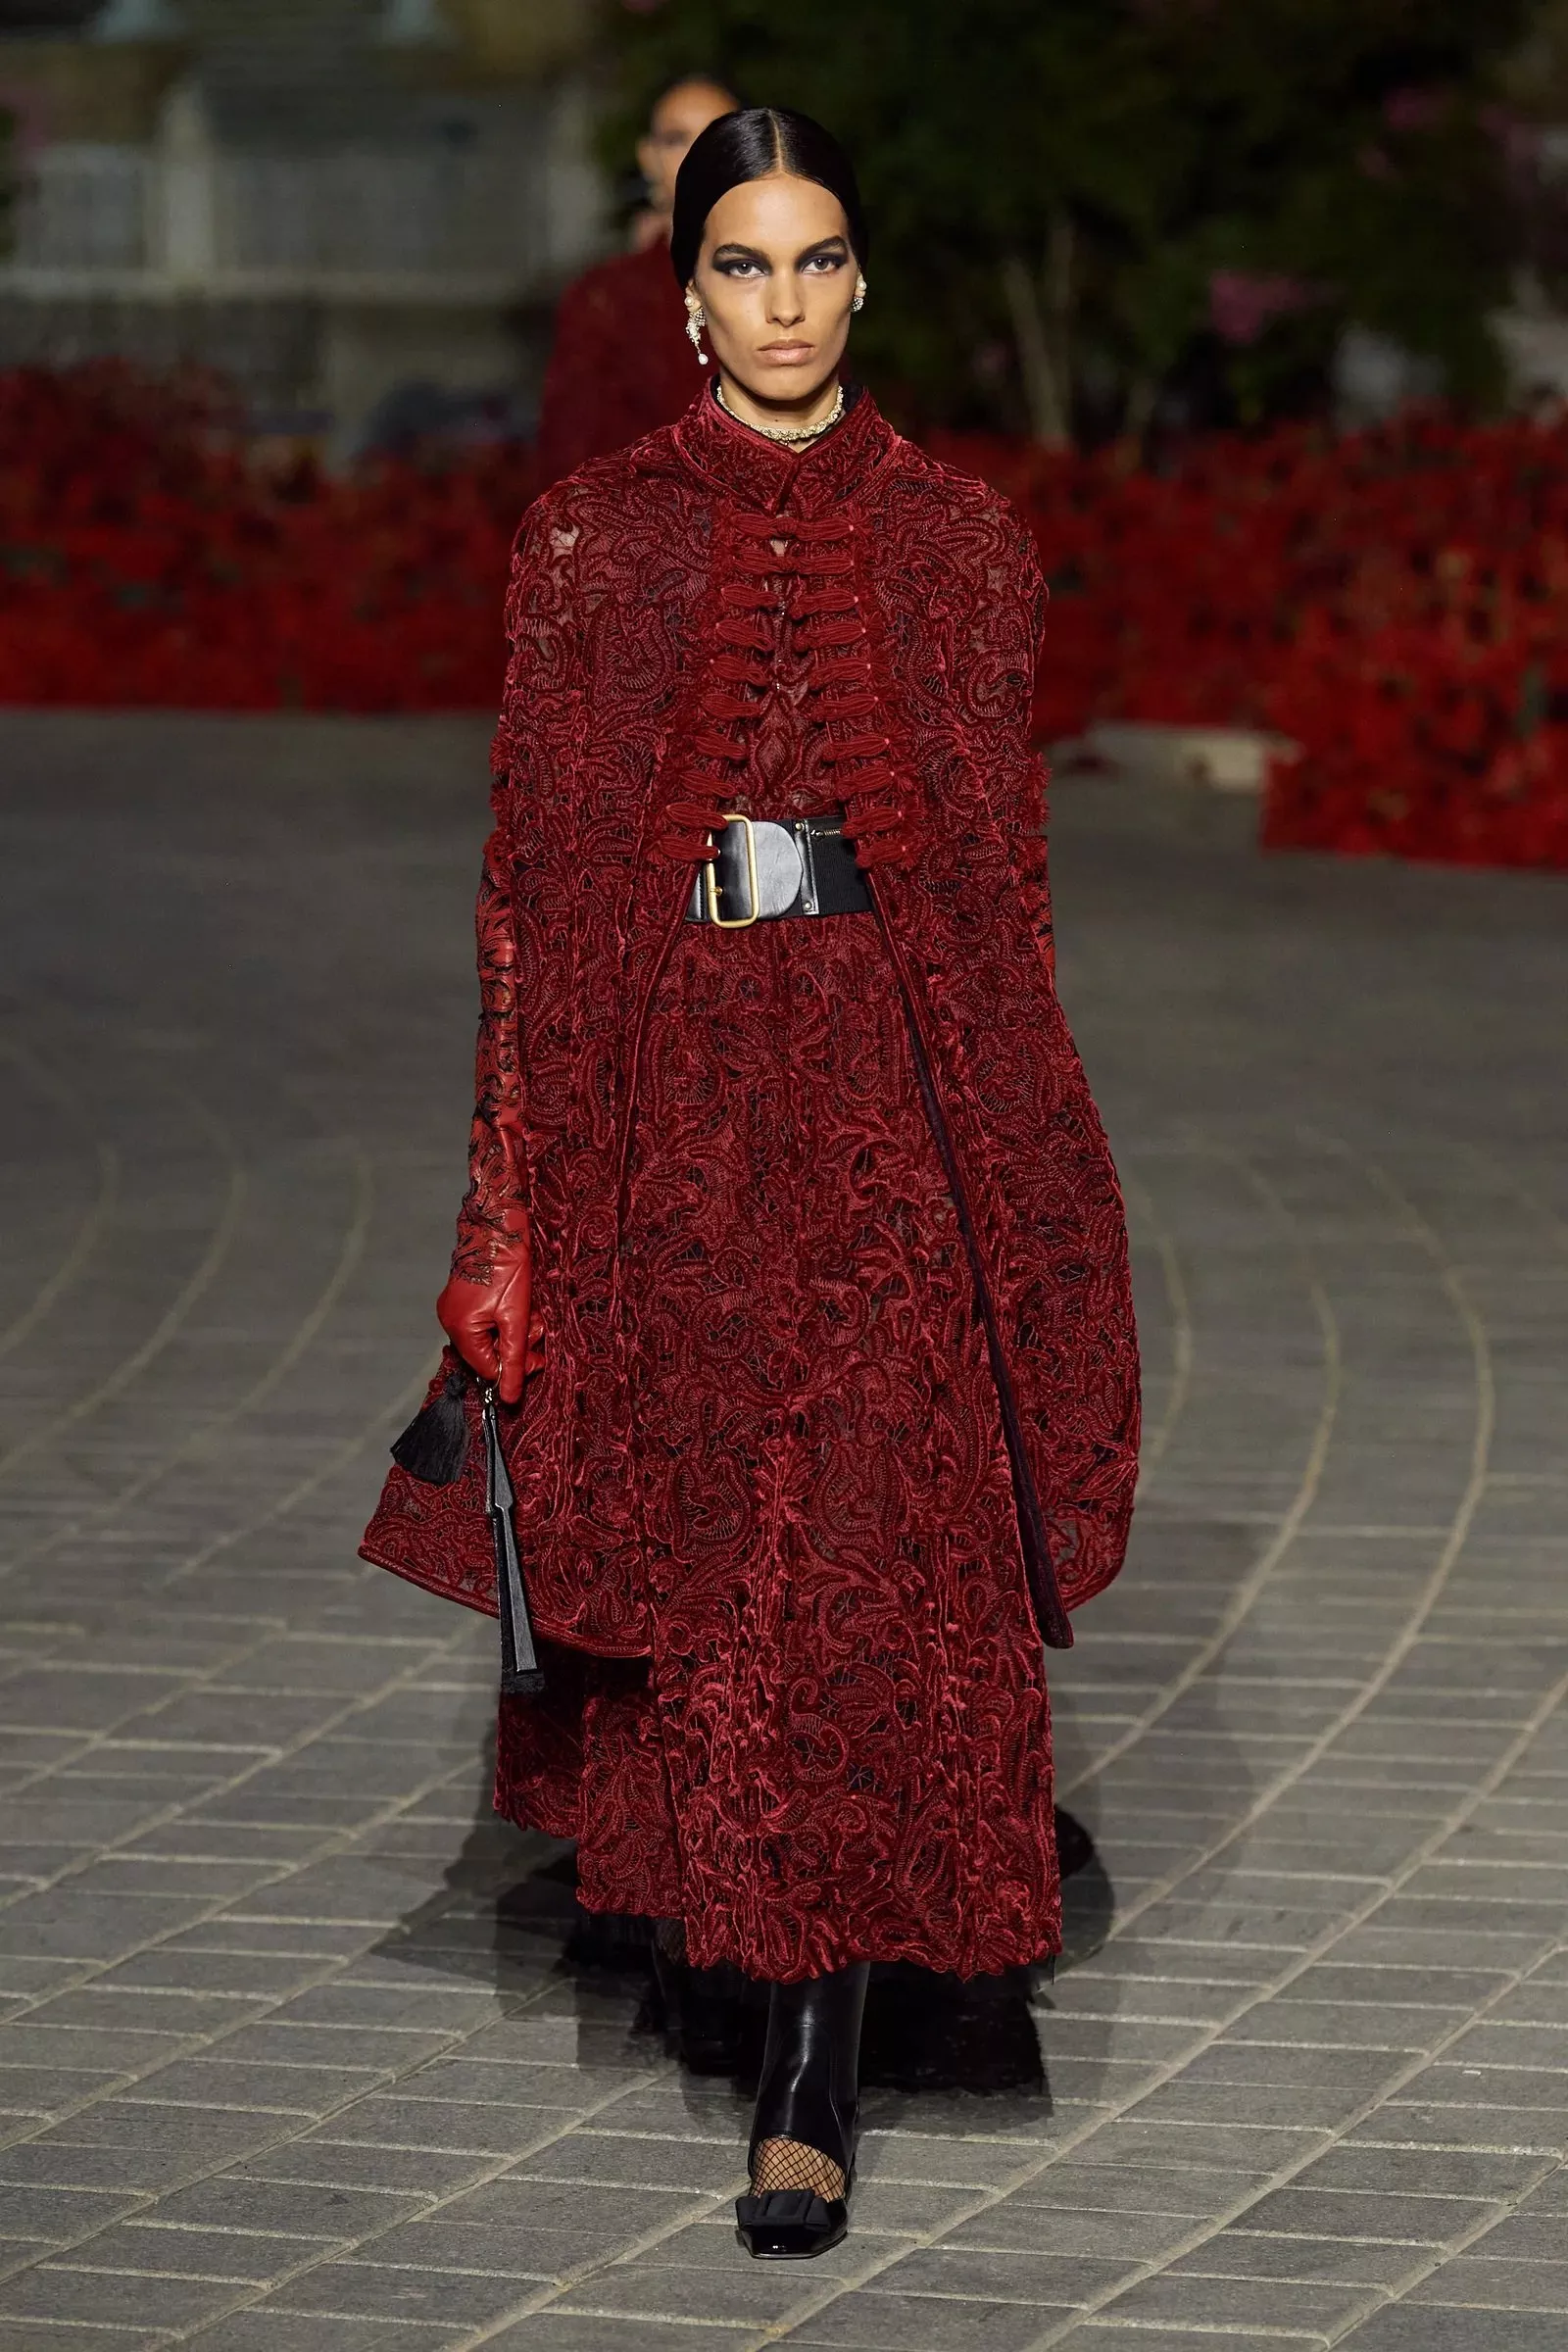 Dior تضيء سماء إشبيلية في إسبانيا بعرض مميّز لمجموعتها التحضيرية لربيع 2023